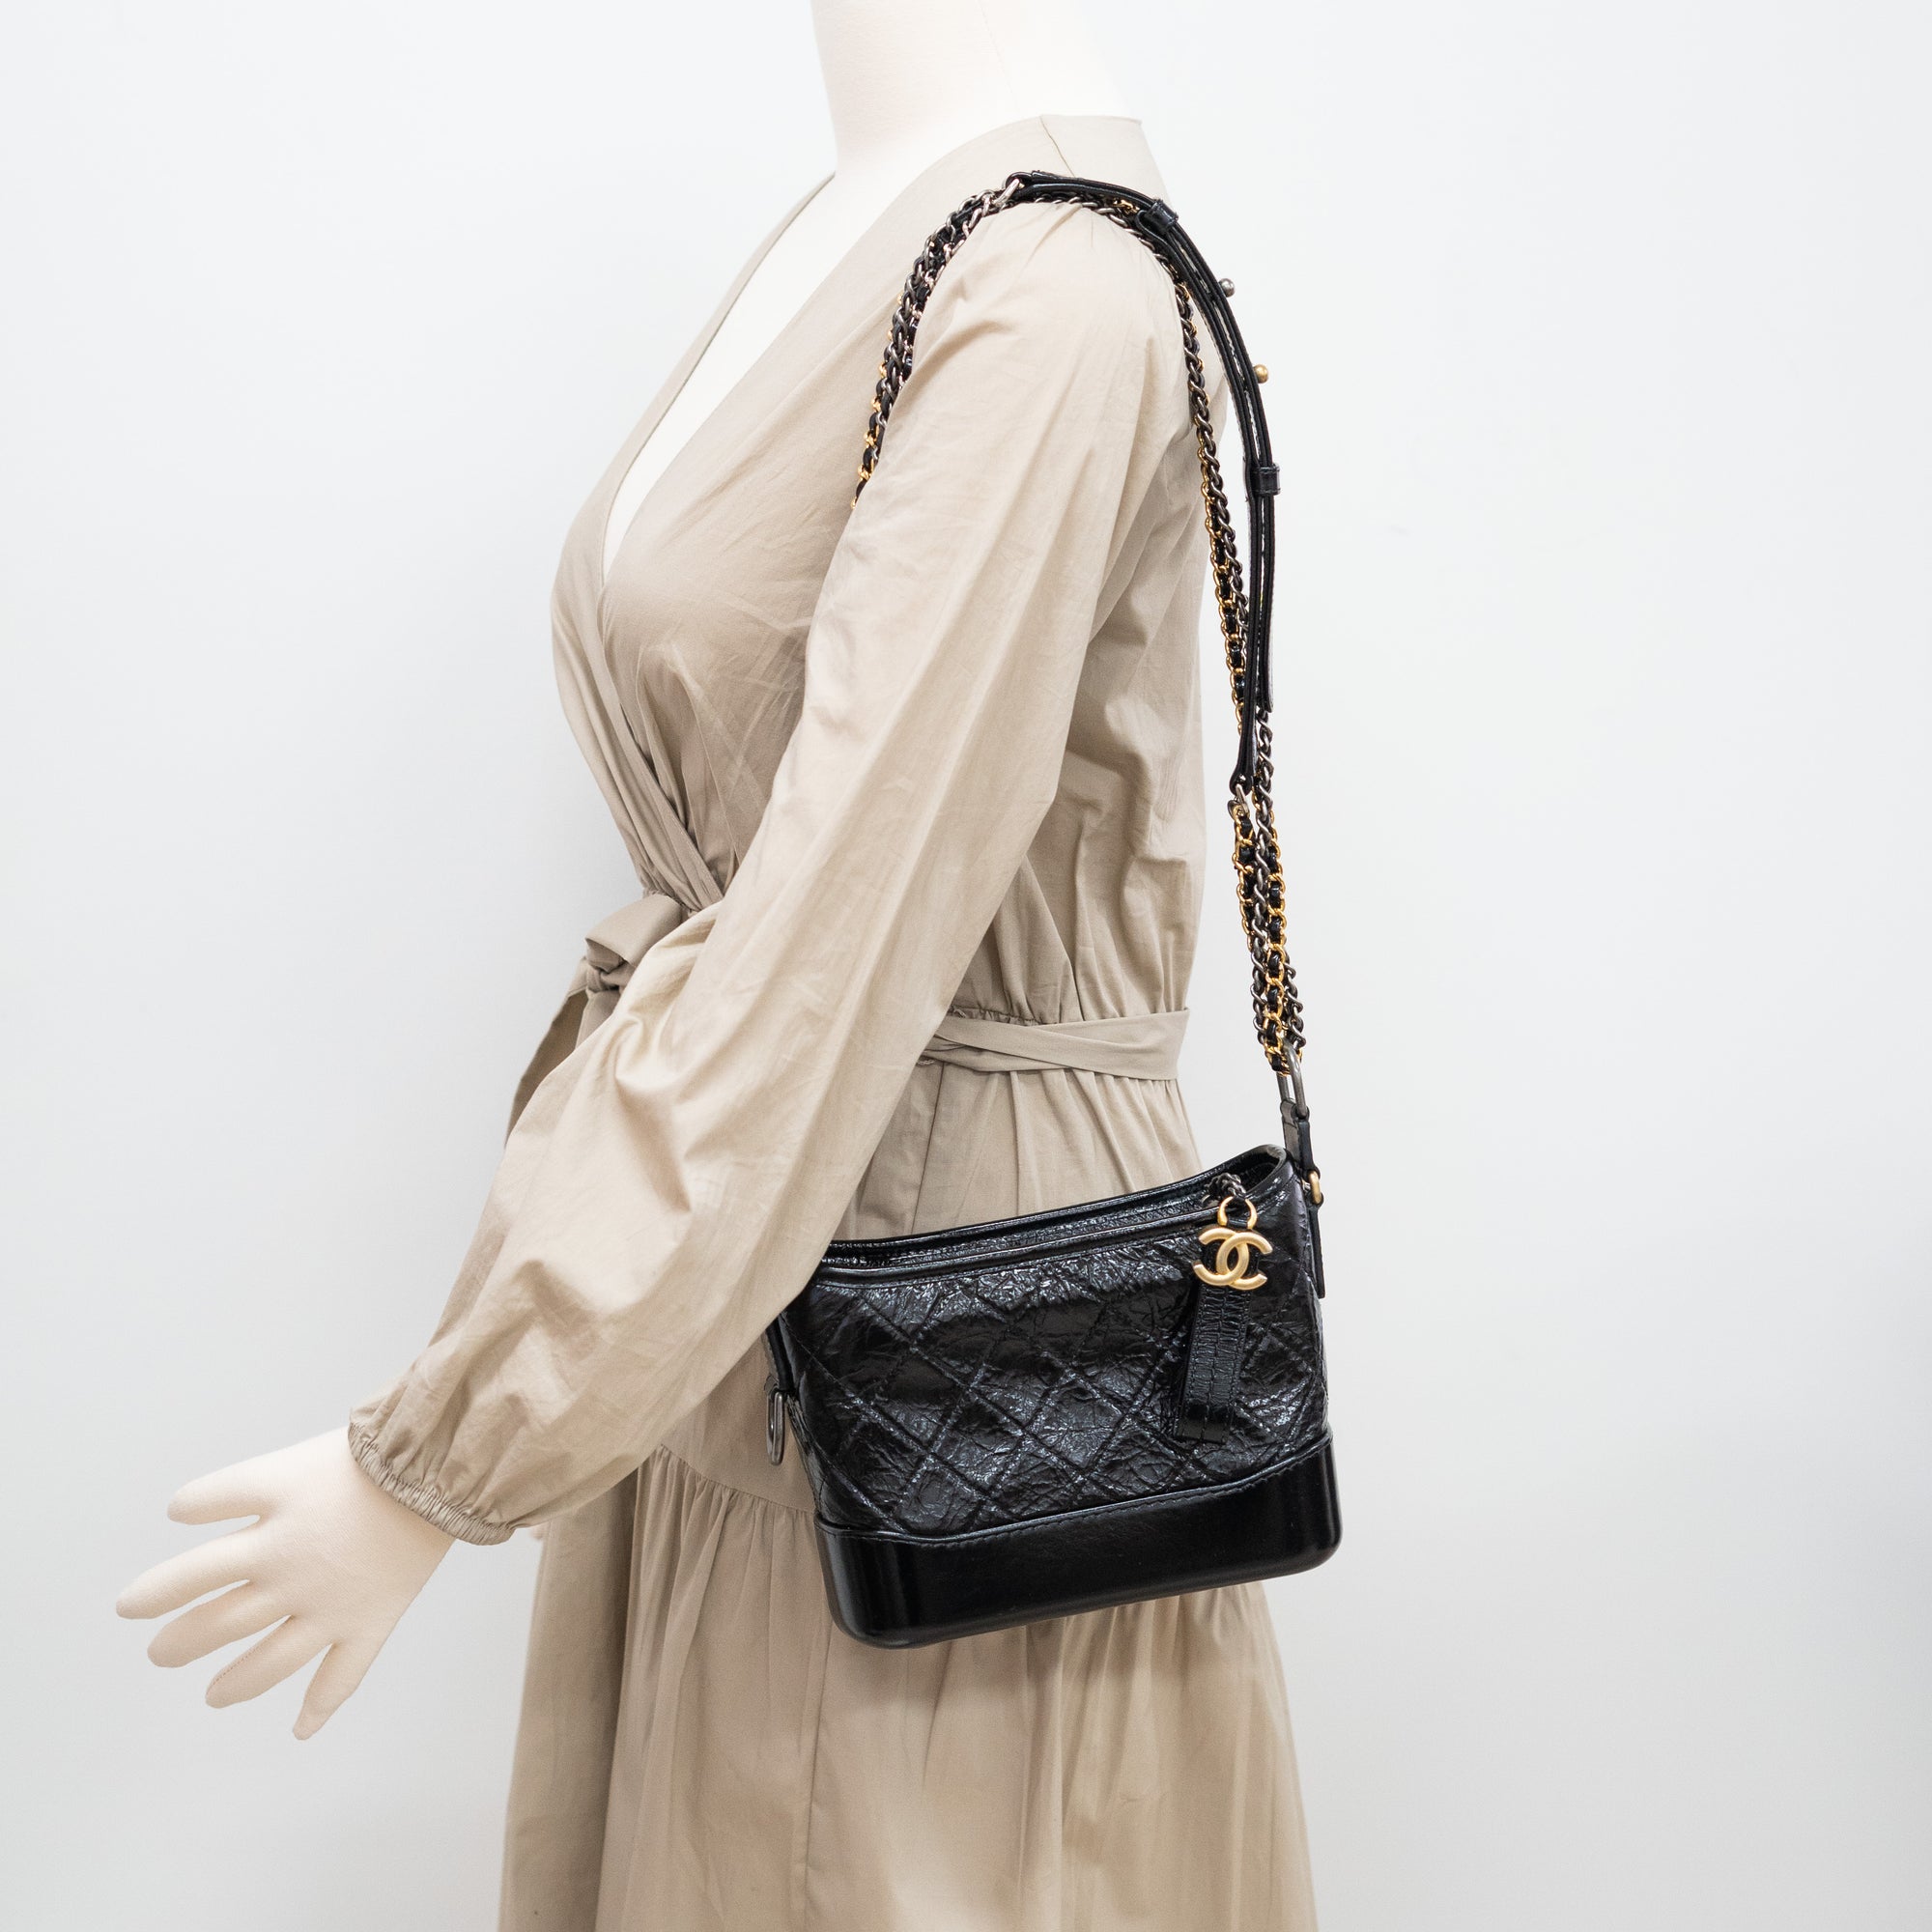 Chanel Gabrielle Hobo Bag